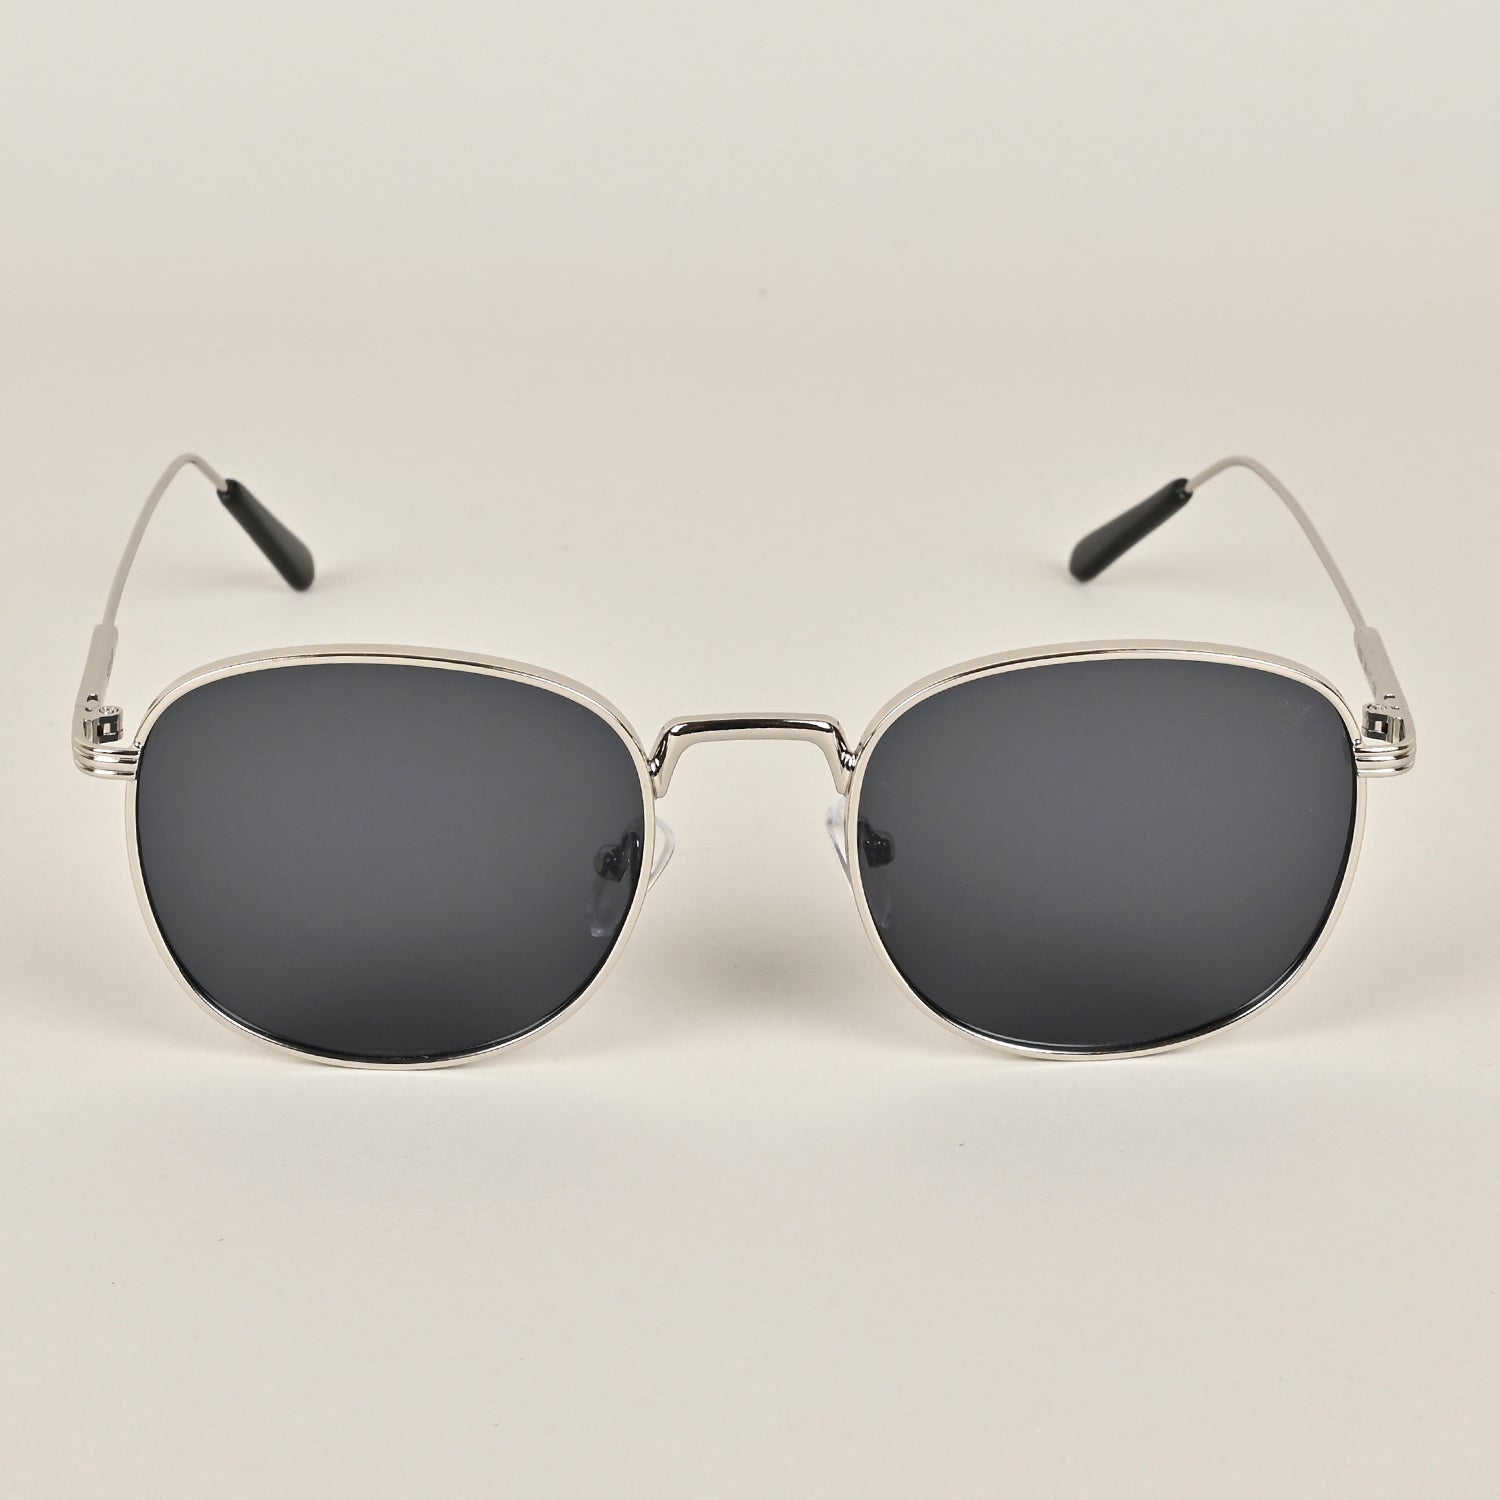 Voyage Round Black Silver Sunglasses MG2977